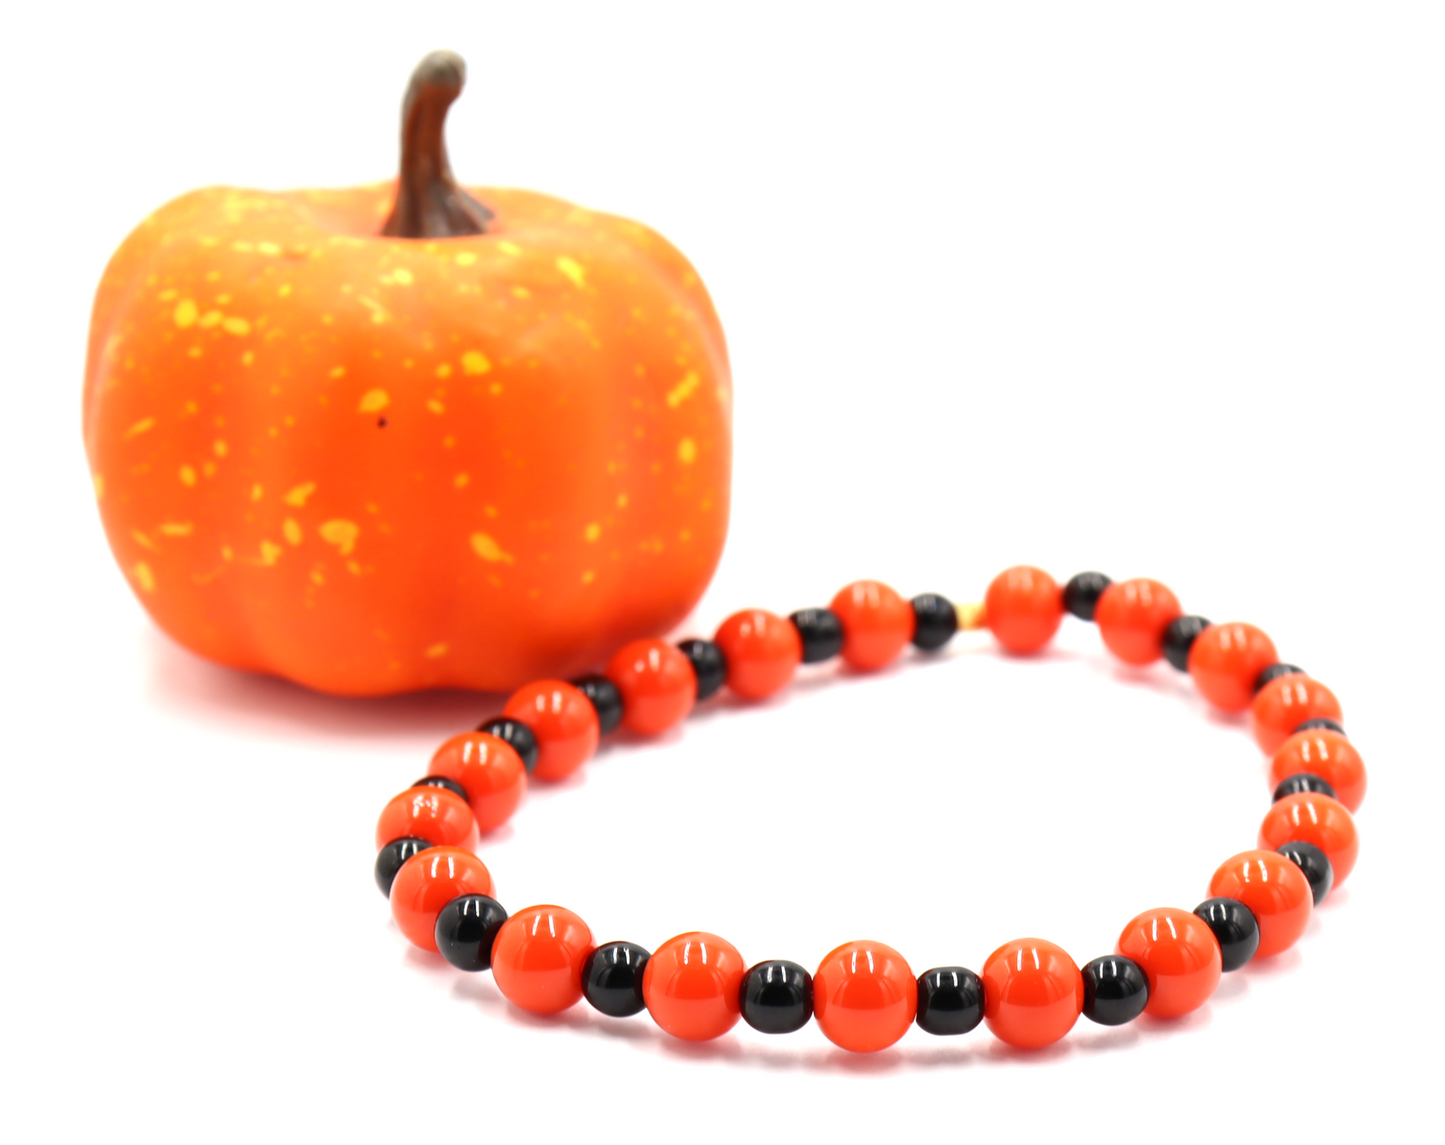 Halloween Classic Sweet Treat Orange and Black Round Glass Beaded Bracelet by Monkey's Mojo